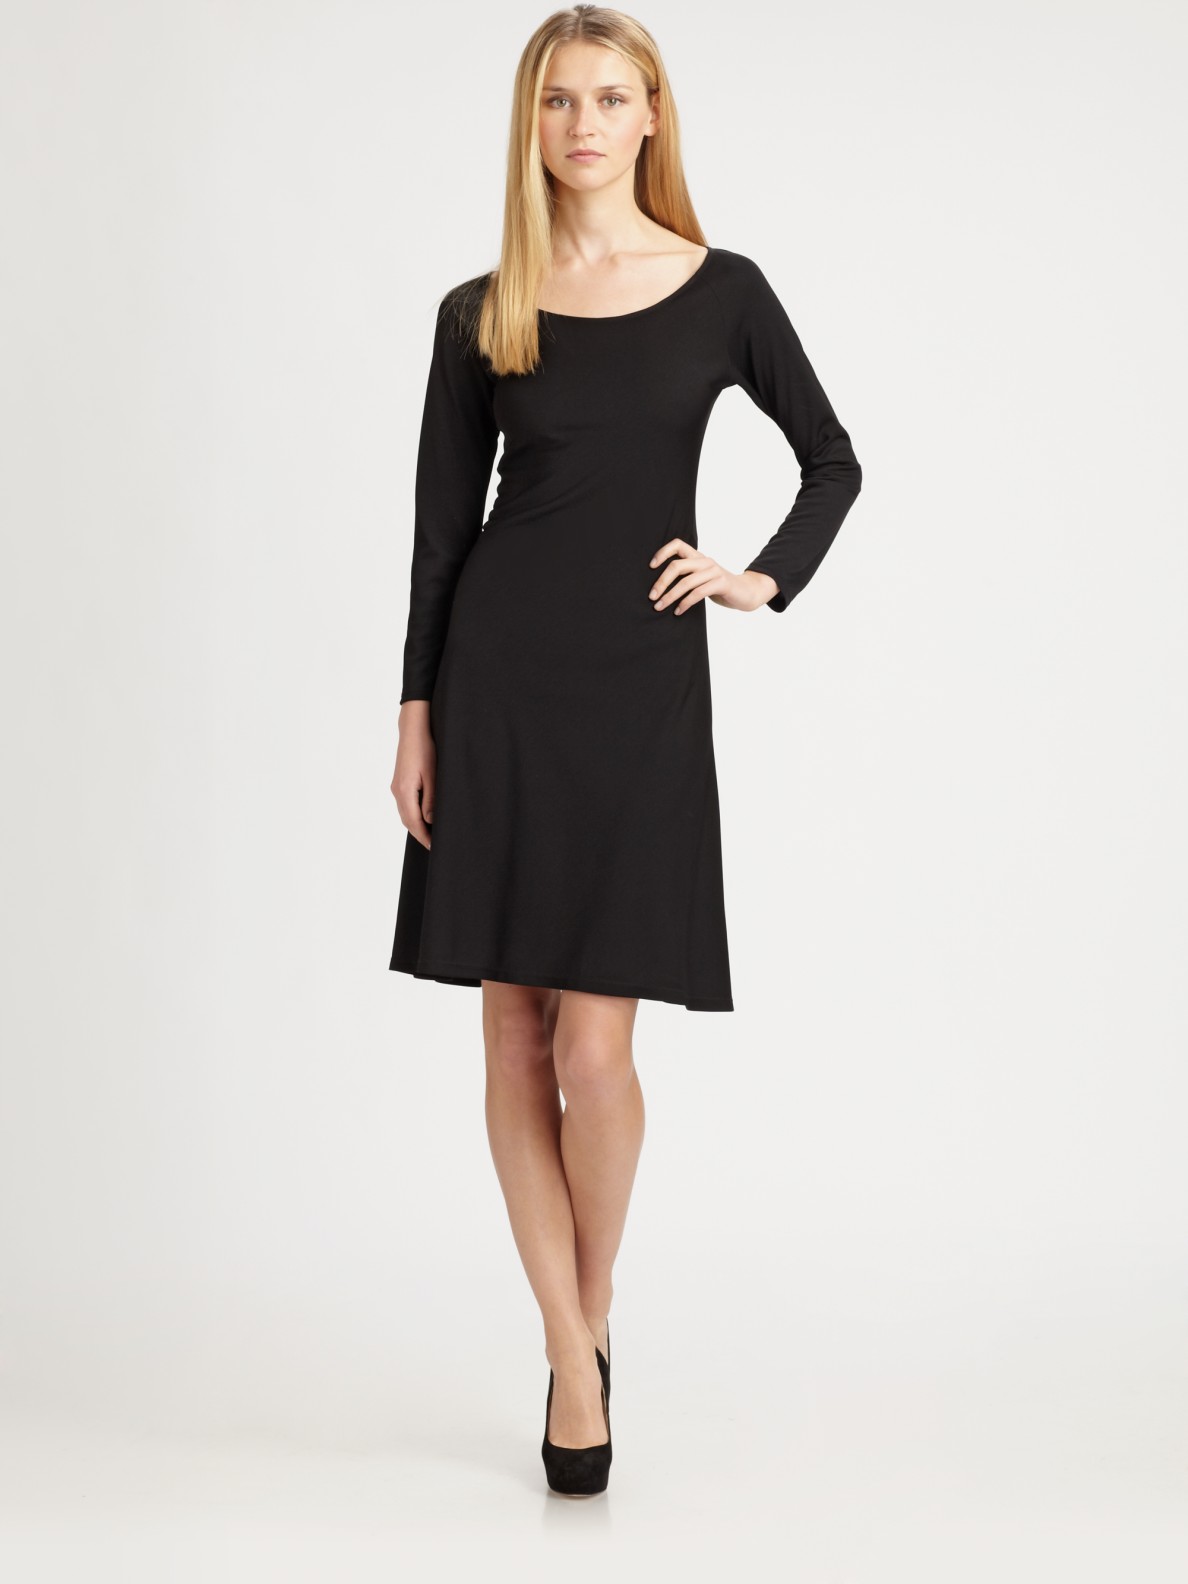 Josie Natori Jersey Scoopneck Dress in Black | Lyst